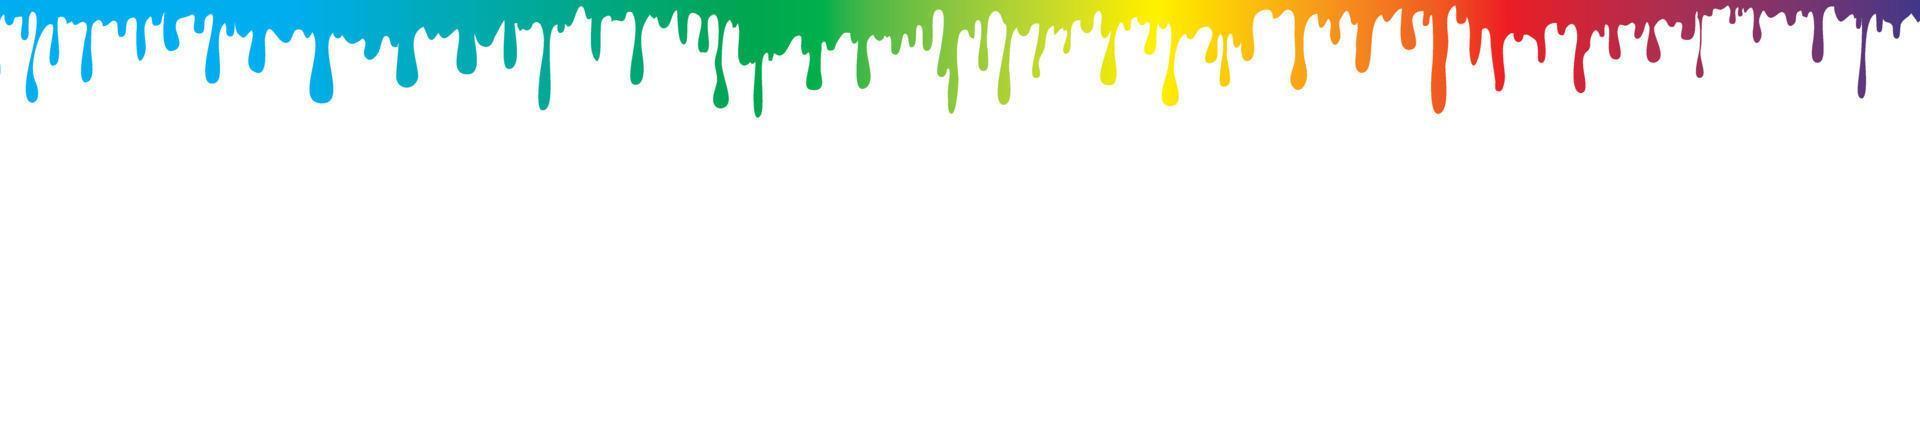 regenboog kleur druppels, vector illustratie, wit achtergrond